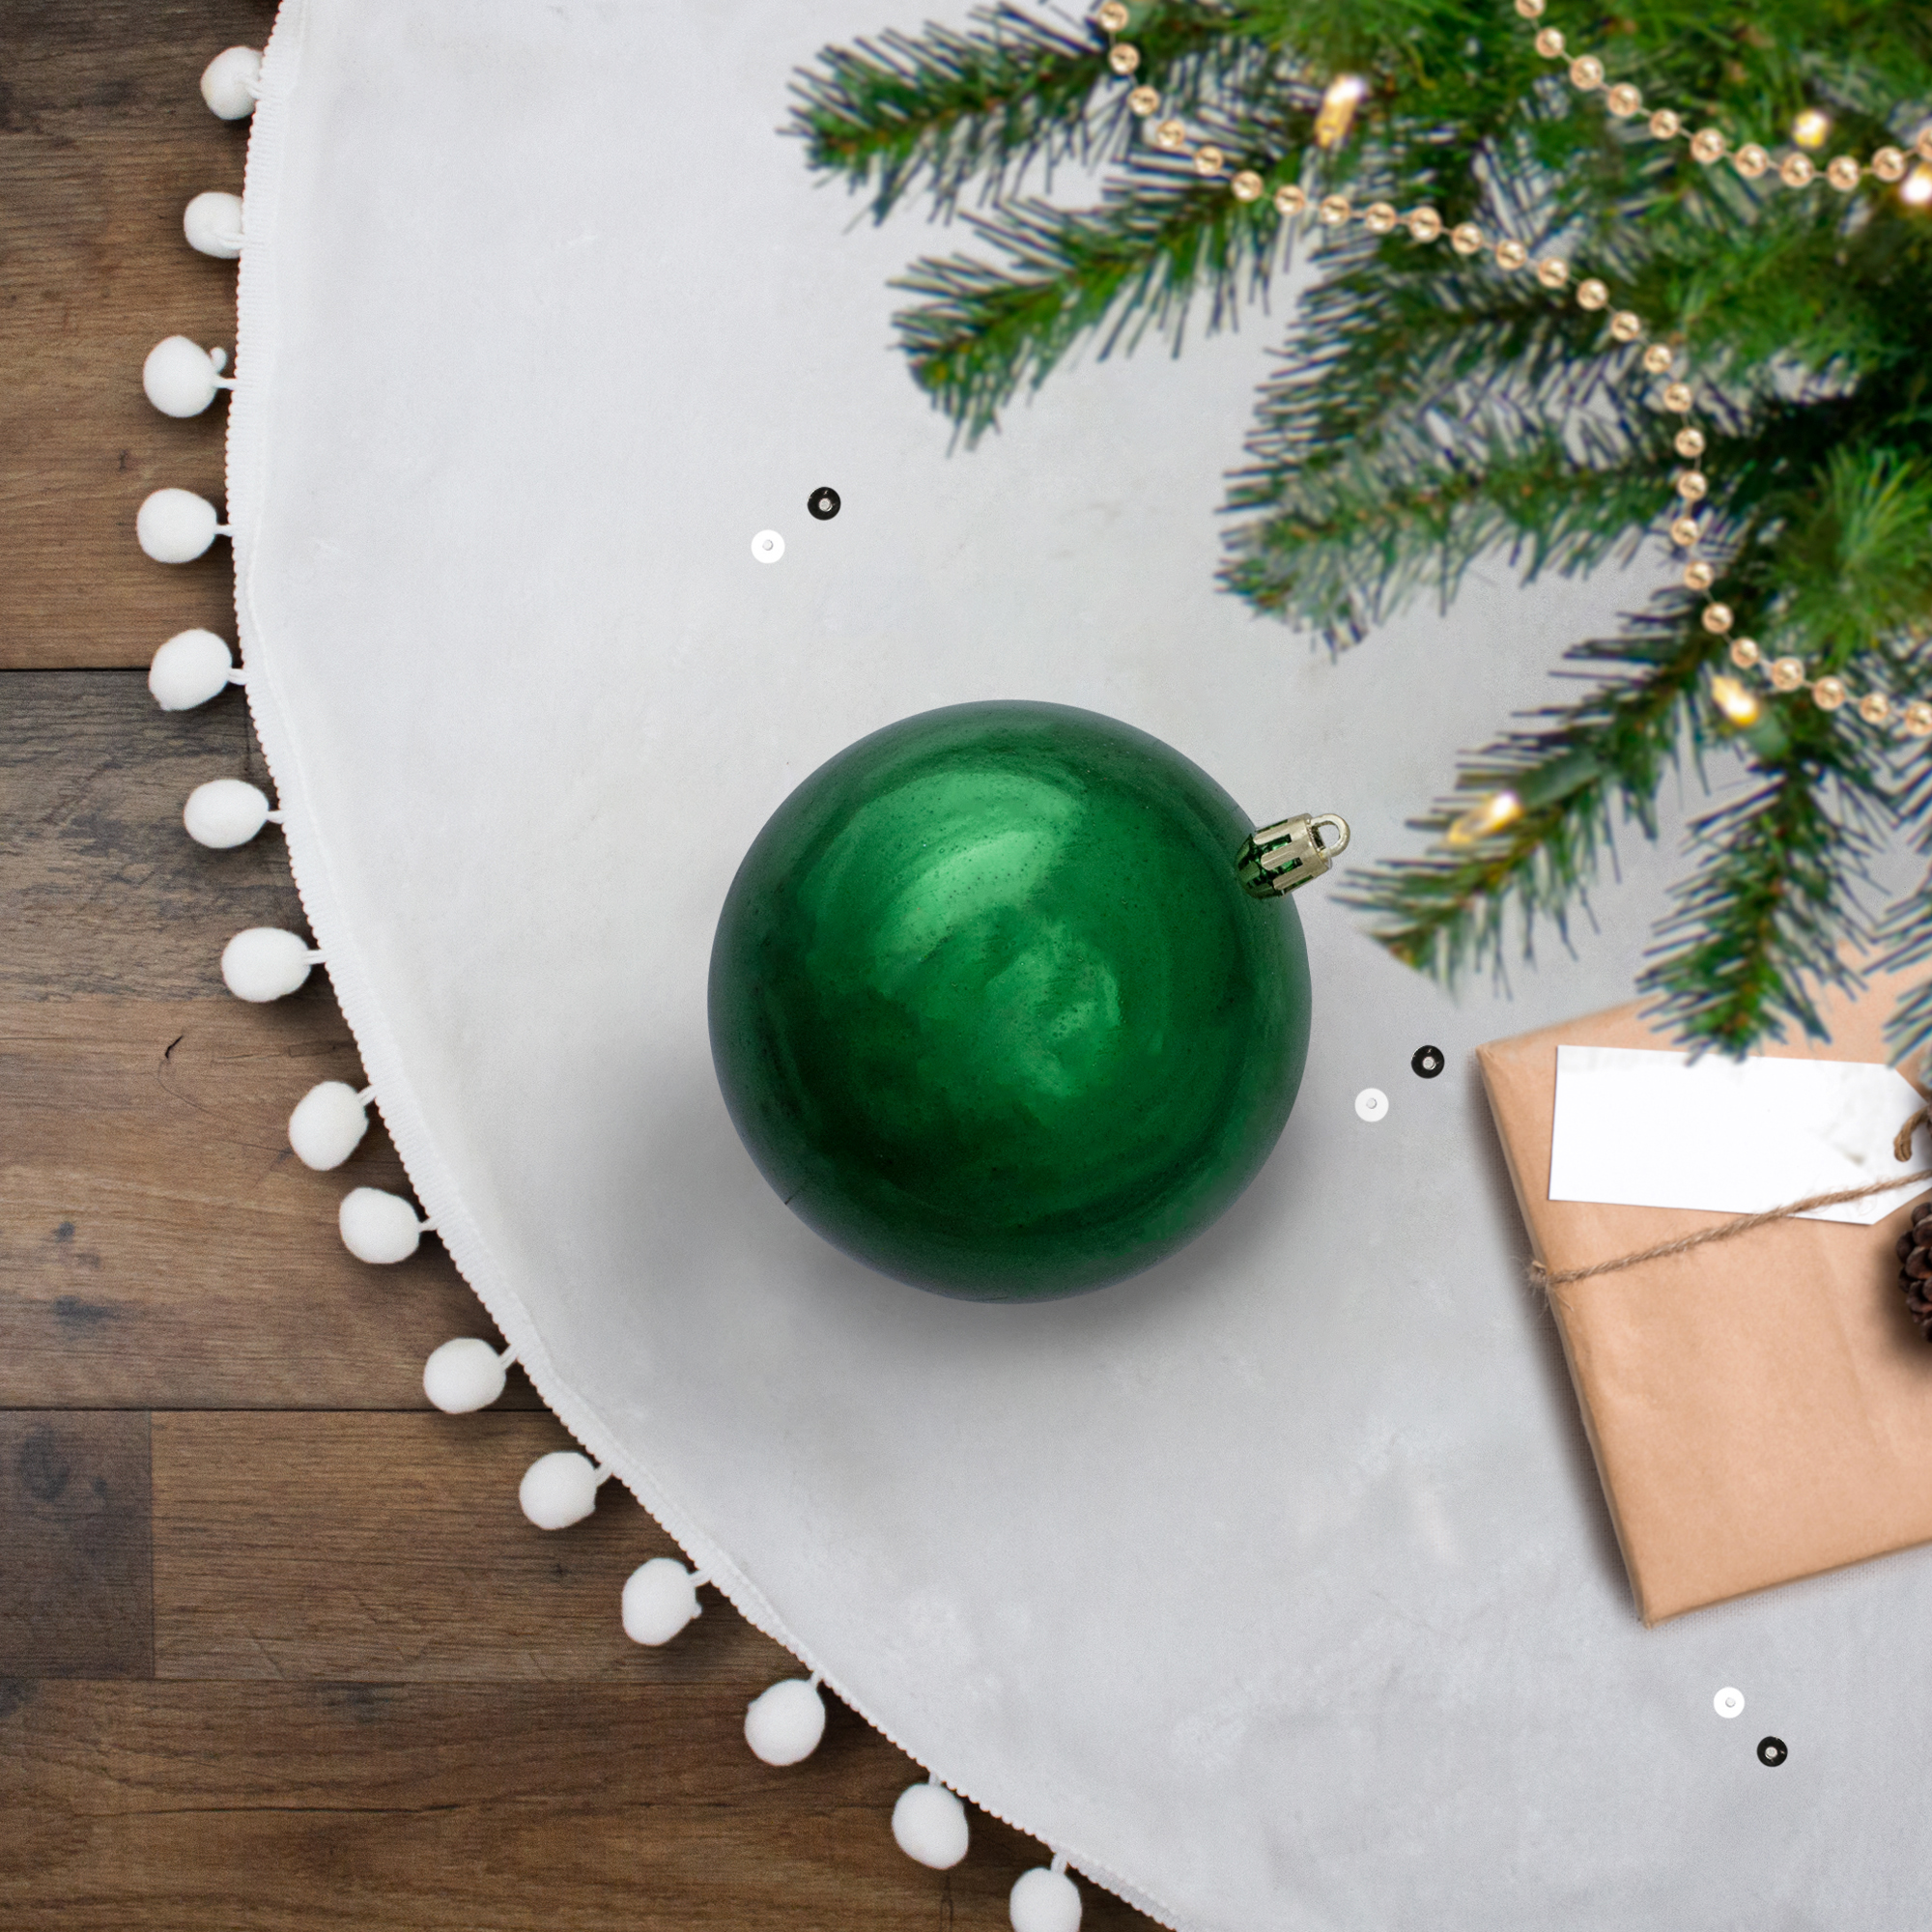 Northlight Christmas Green Shatterproof Shiny Christmas Ball Ornament 4" (100mm)